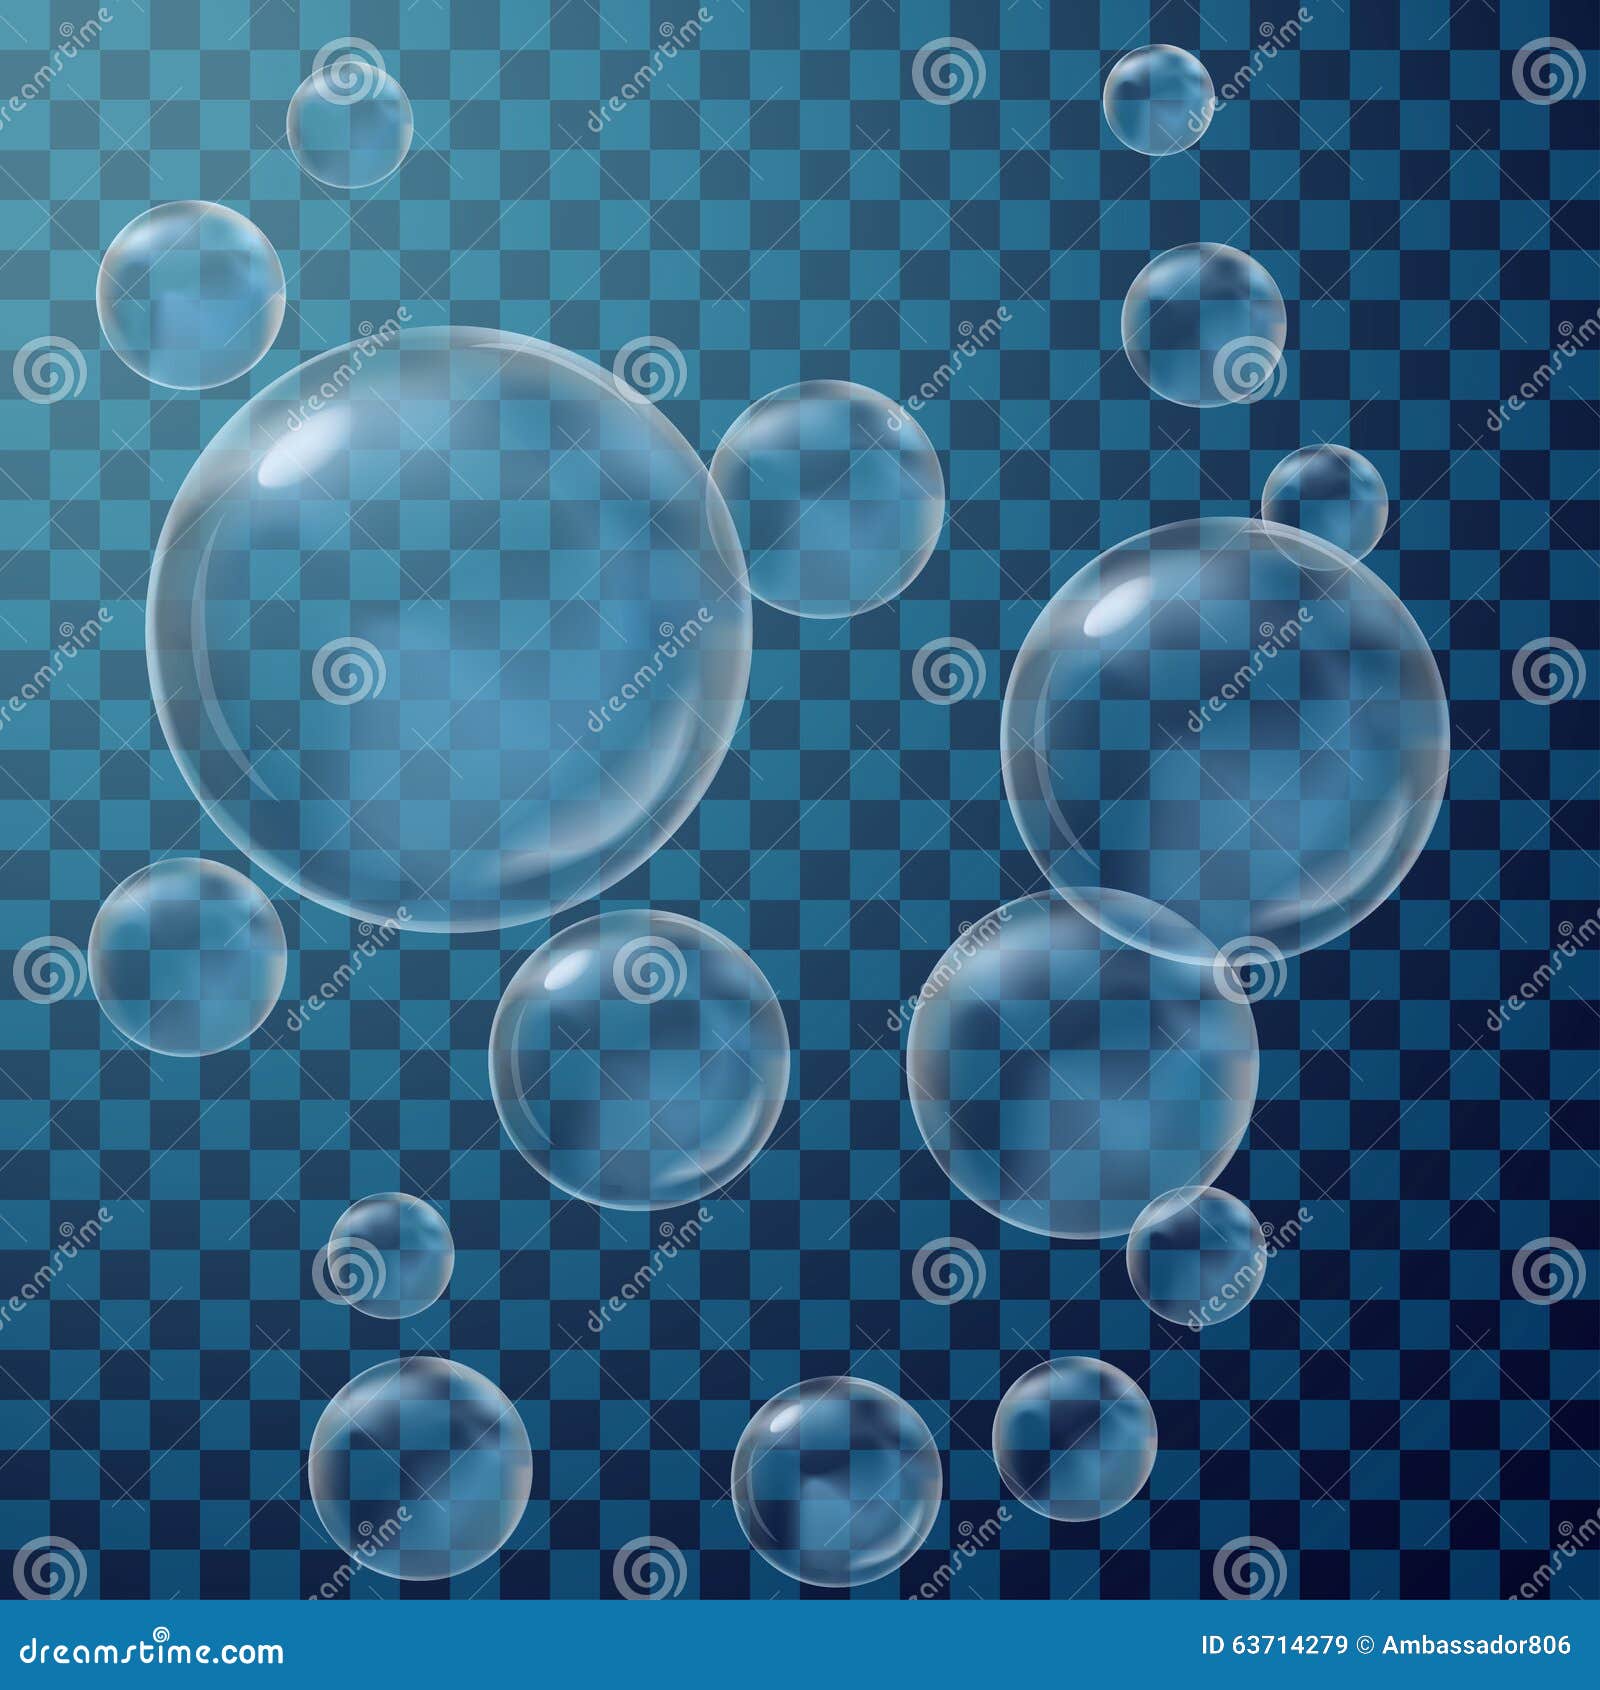 underwater bubbles clipart - photo #47